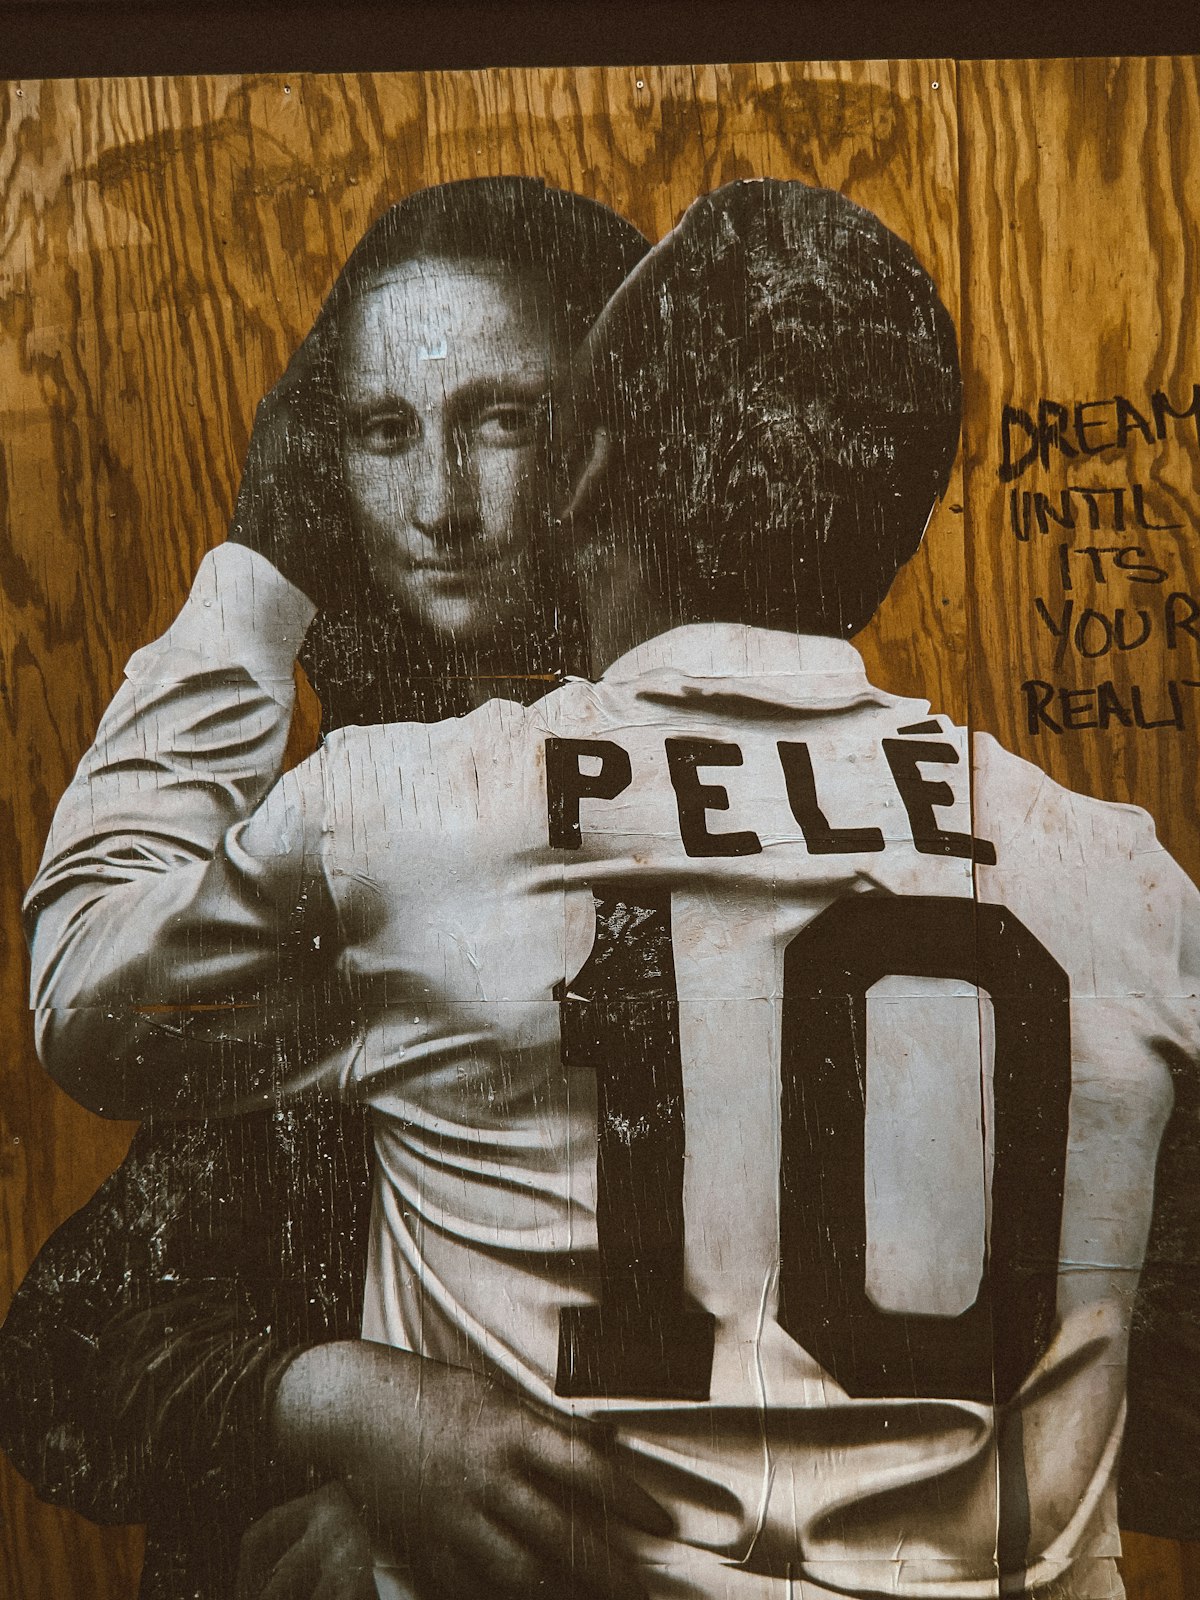 Santos began preparations for Pele's funeral